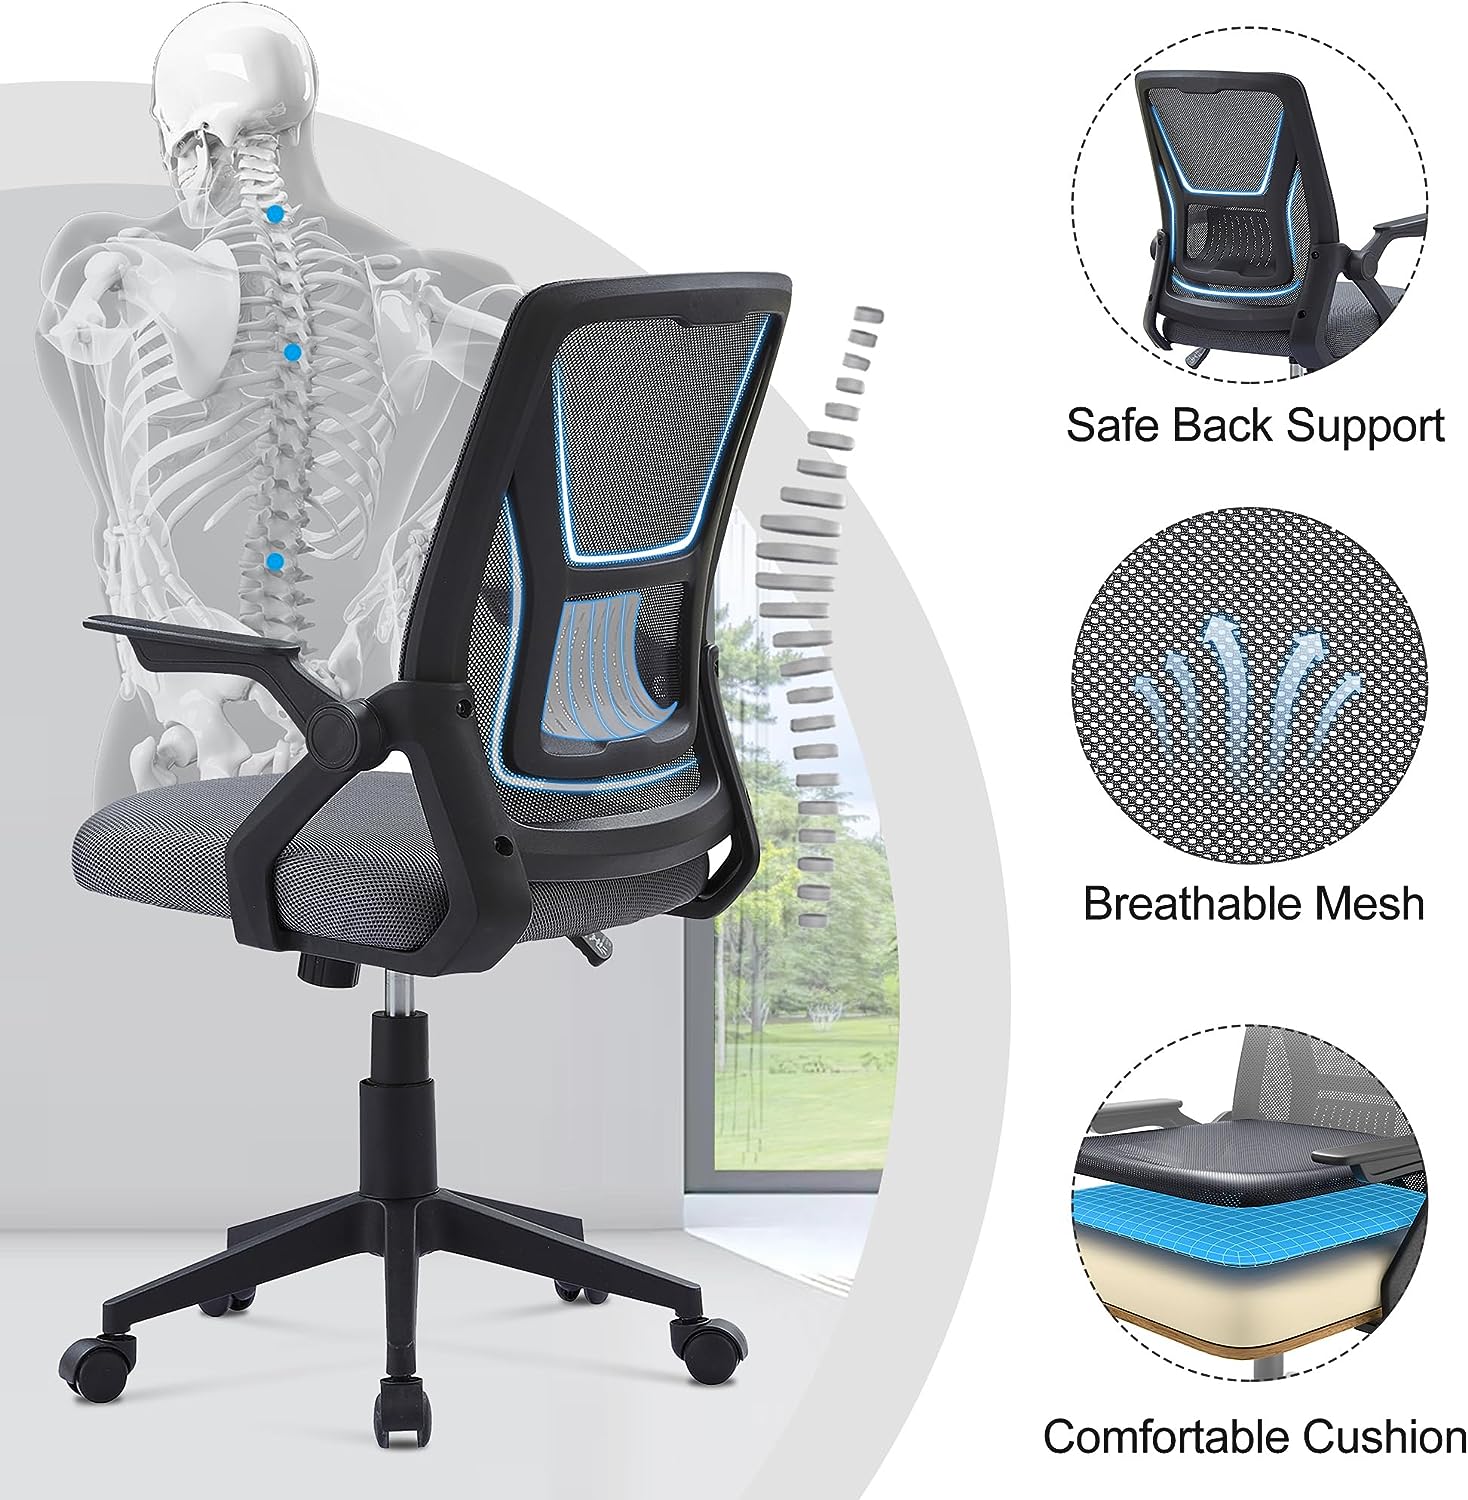 Breathable Mesh & Ergonomic Lower Back Cushion/Lumbar Support